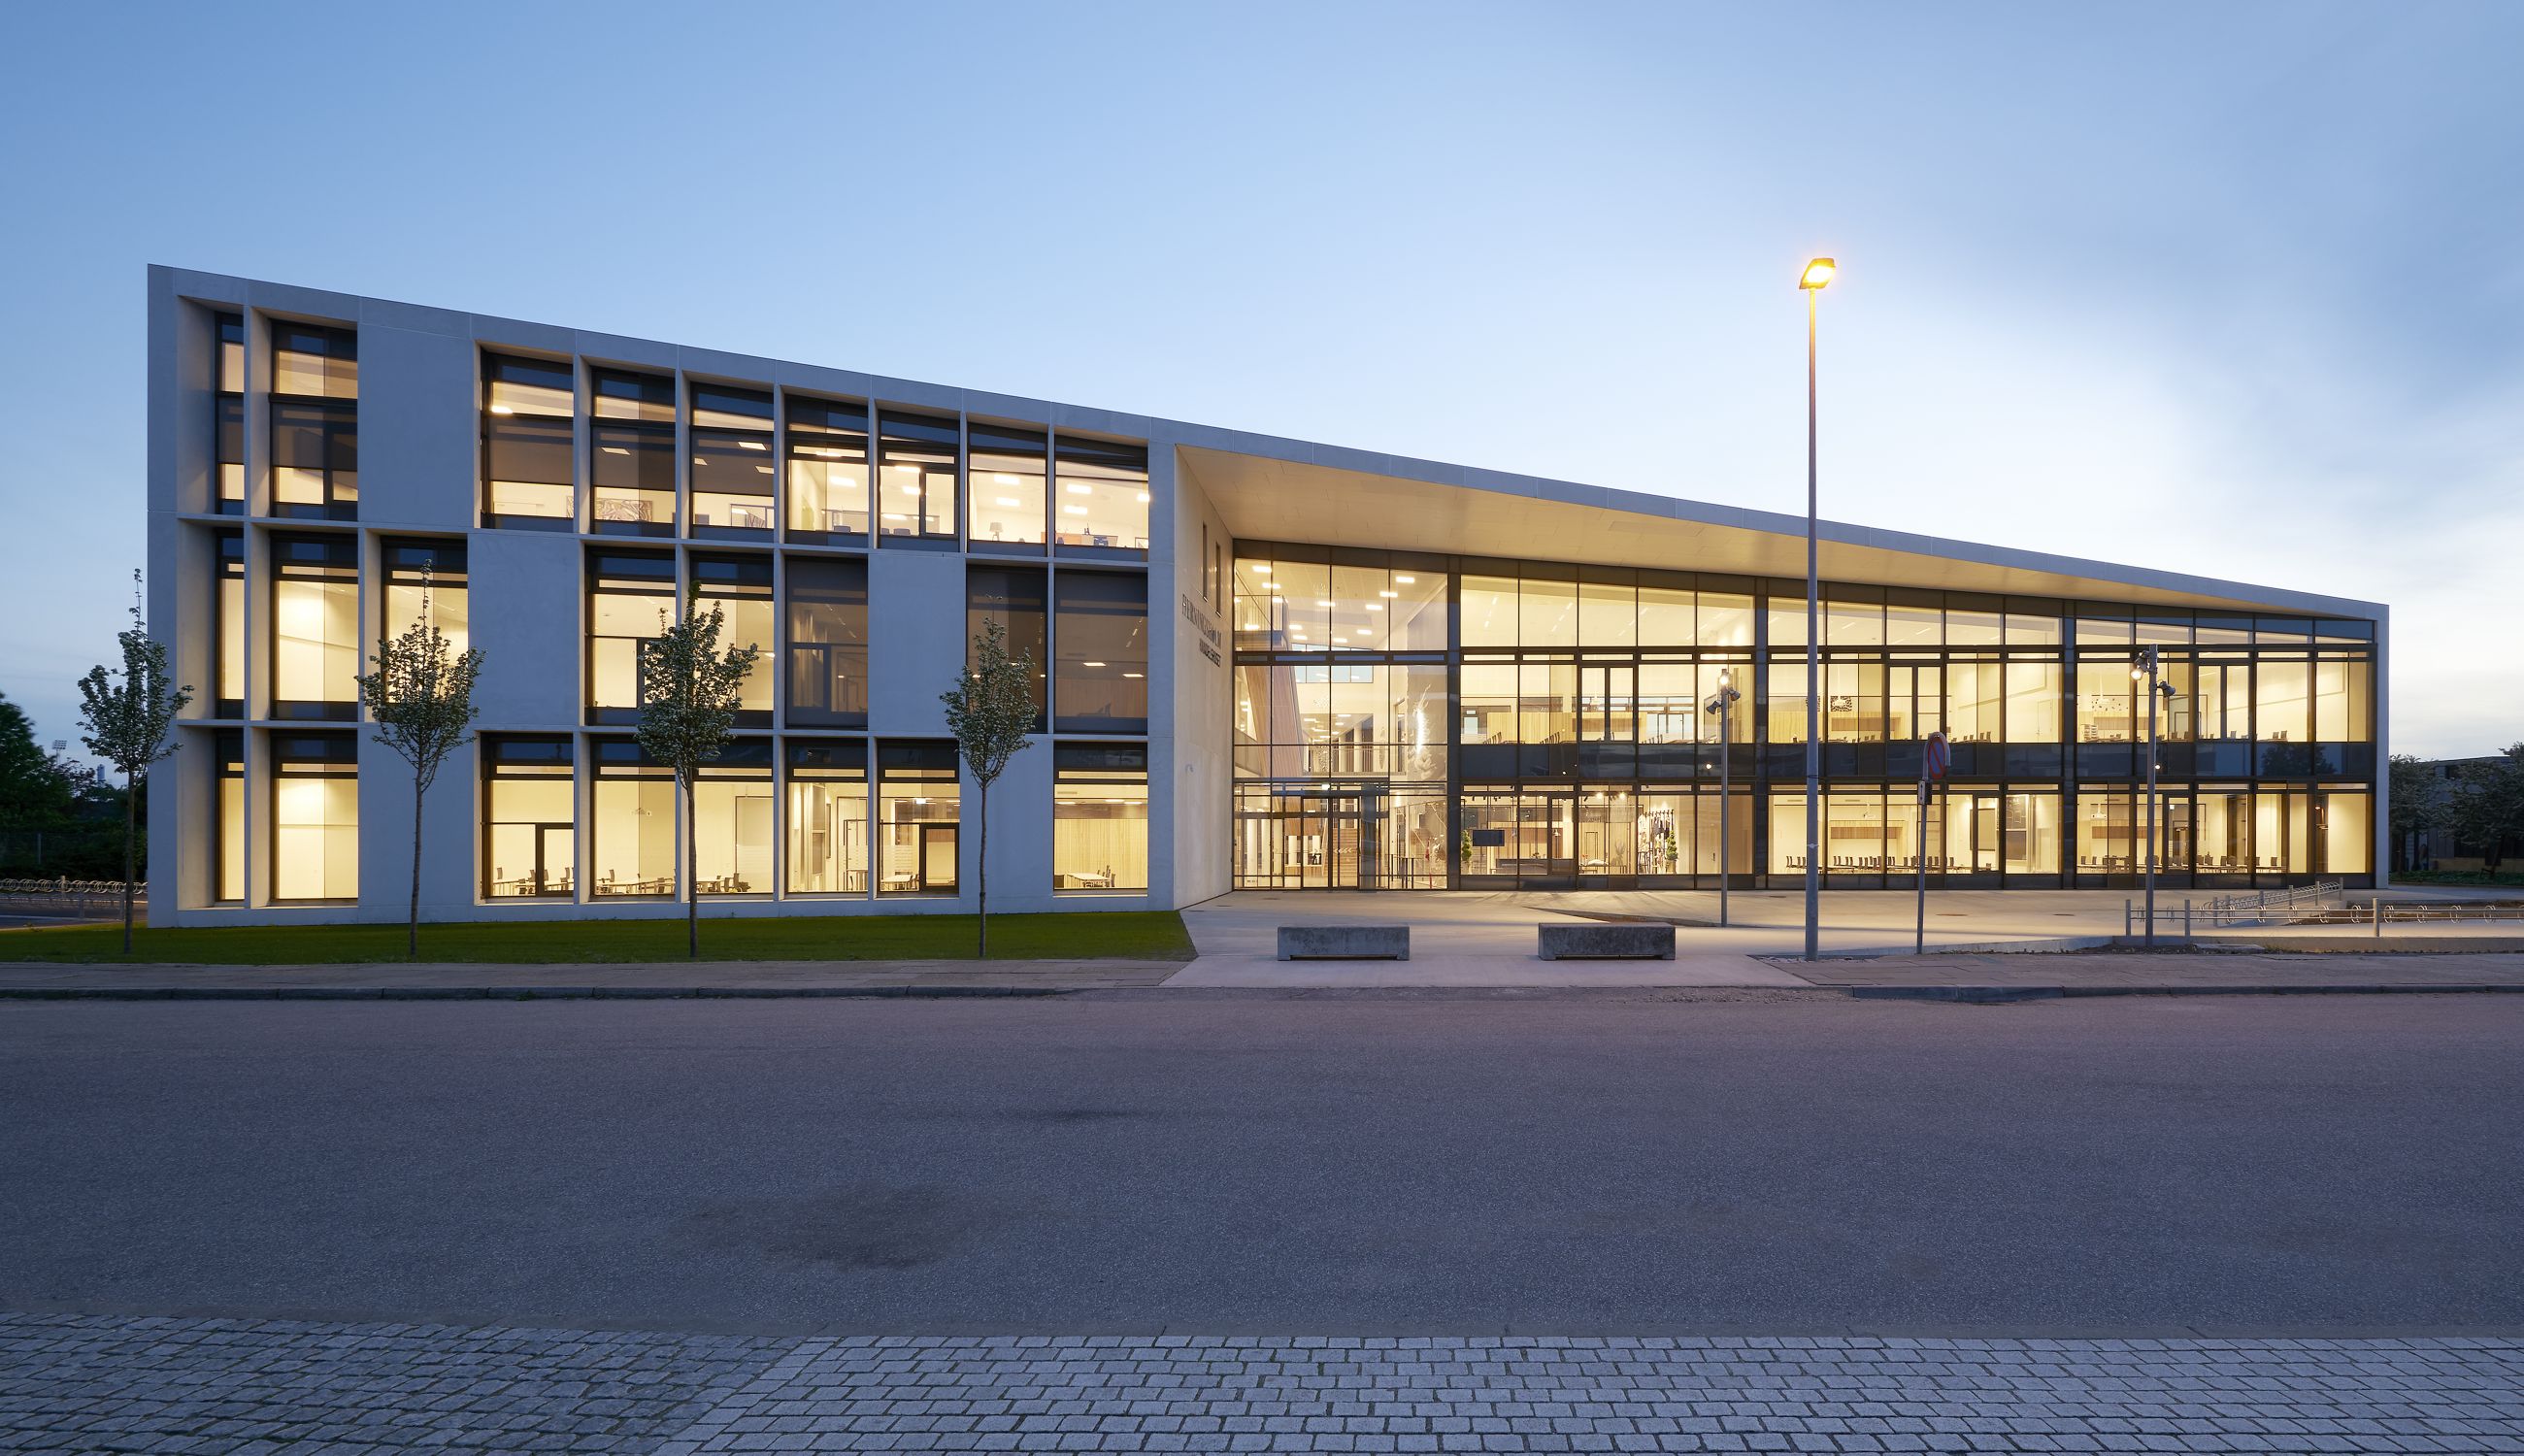 School architecture. Музыкальная школа фасад Финляндия. Архитектура школа Litherland High School. Школа в Швеции архитектура.